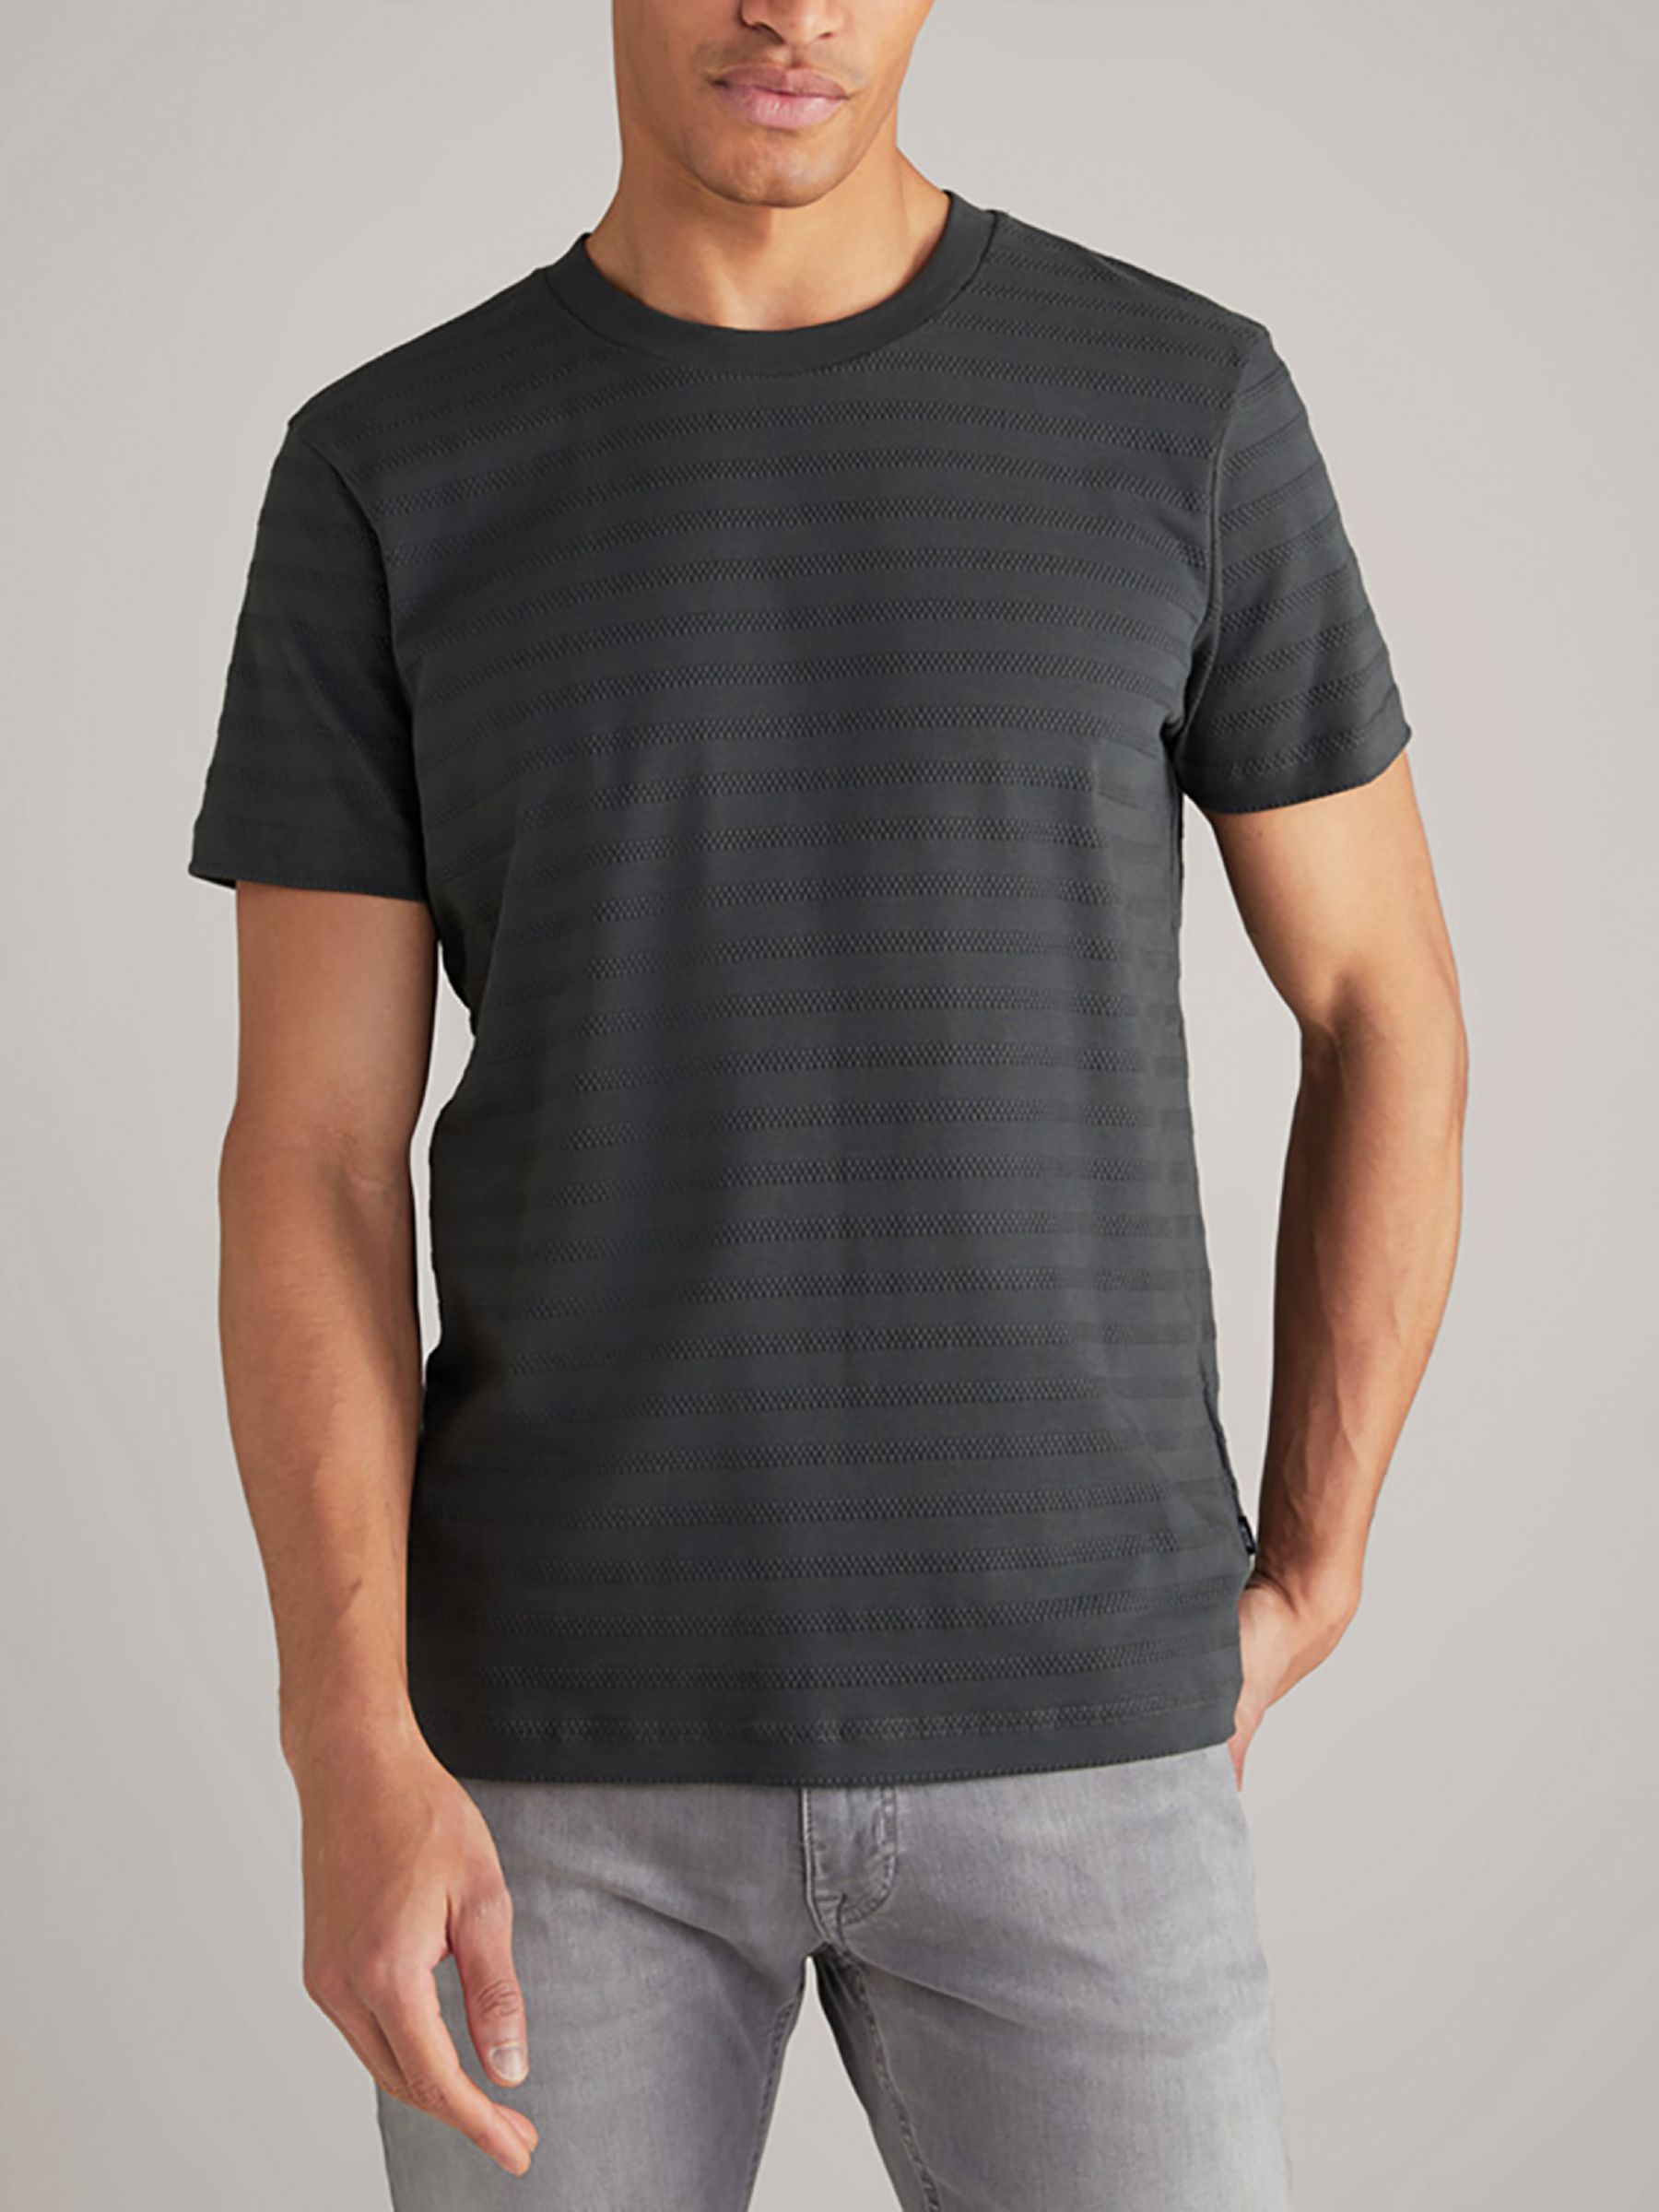 JOOP! Carisio Short Sleeve T-shirt, Black, S